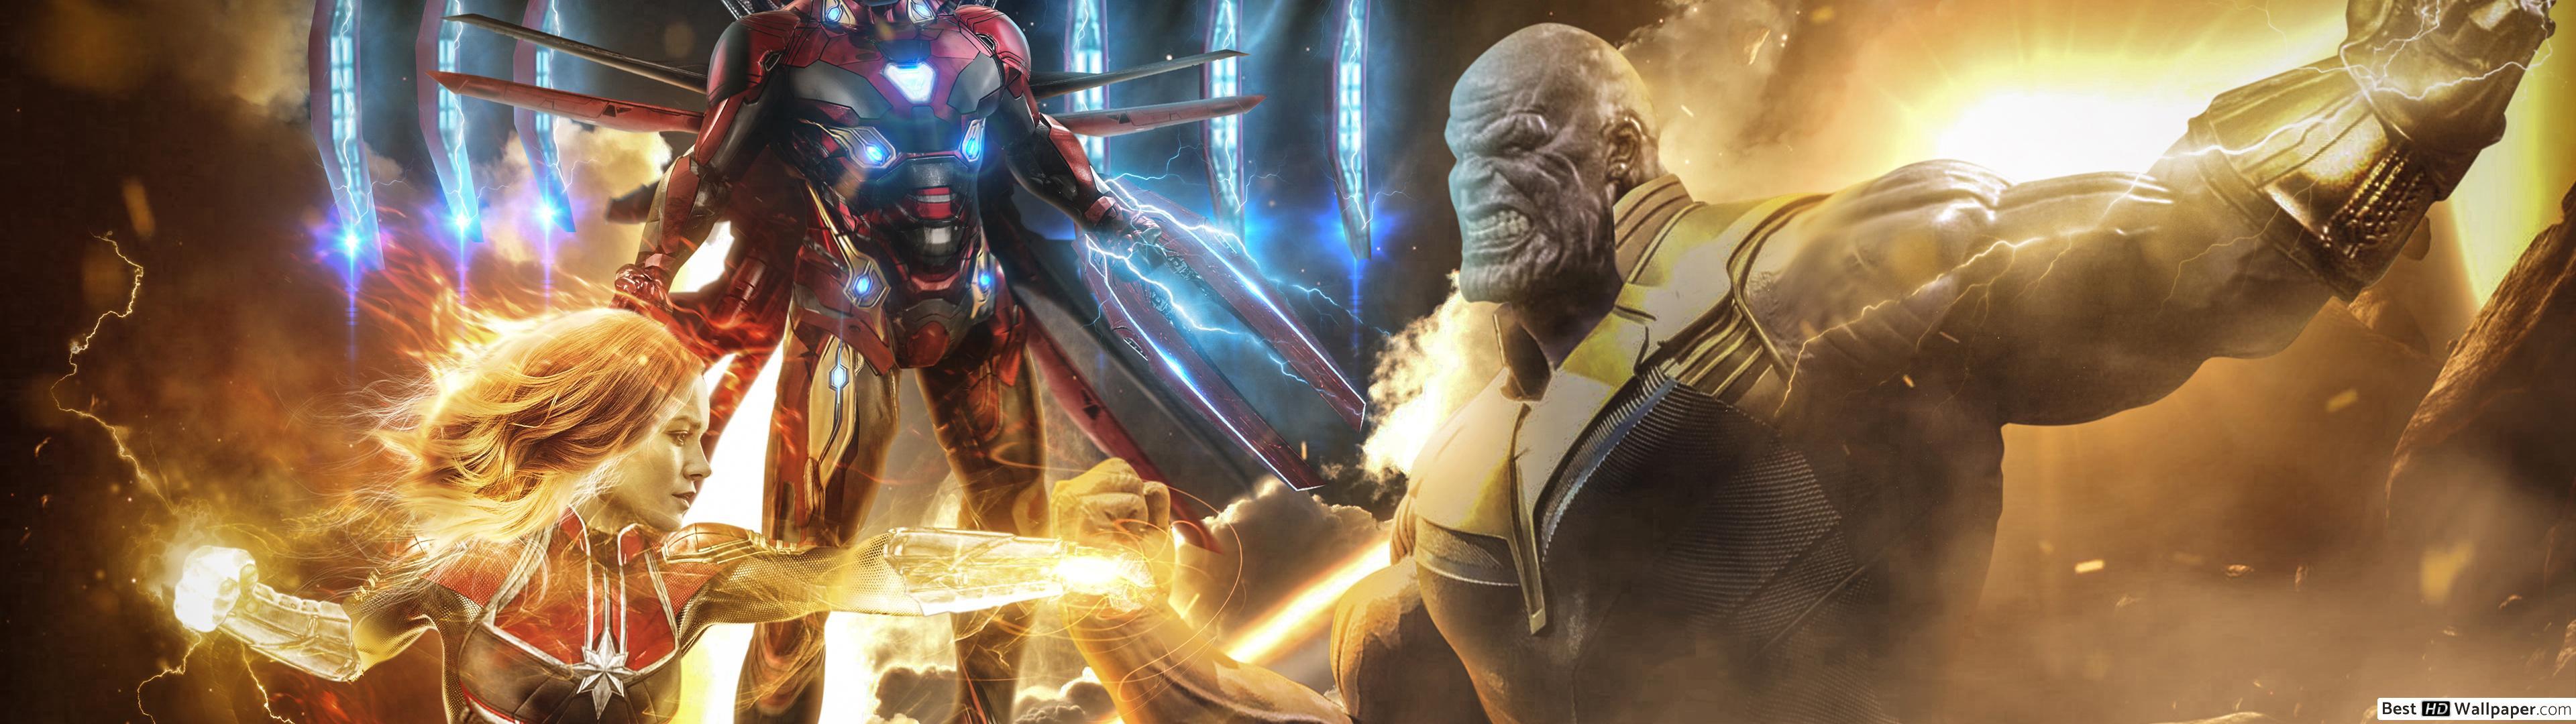 Endgame vs Iron man and Captain marvel HD wallpaper